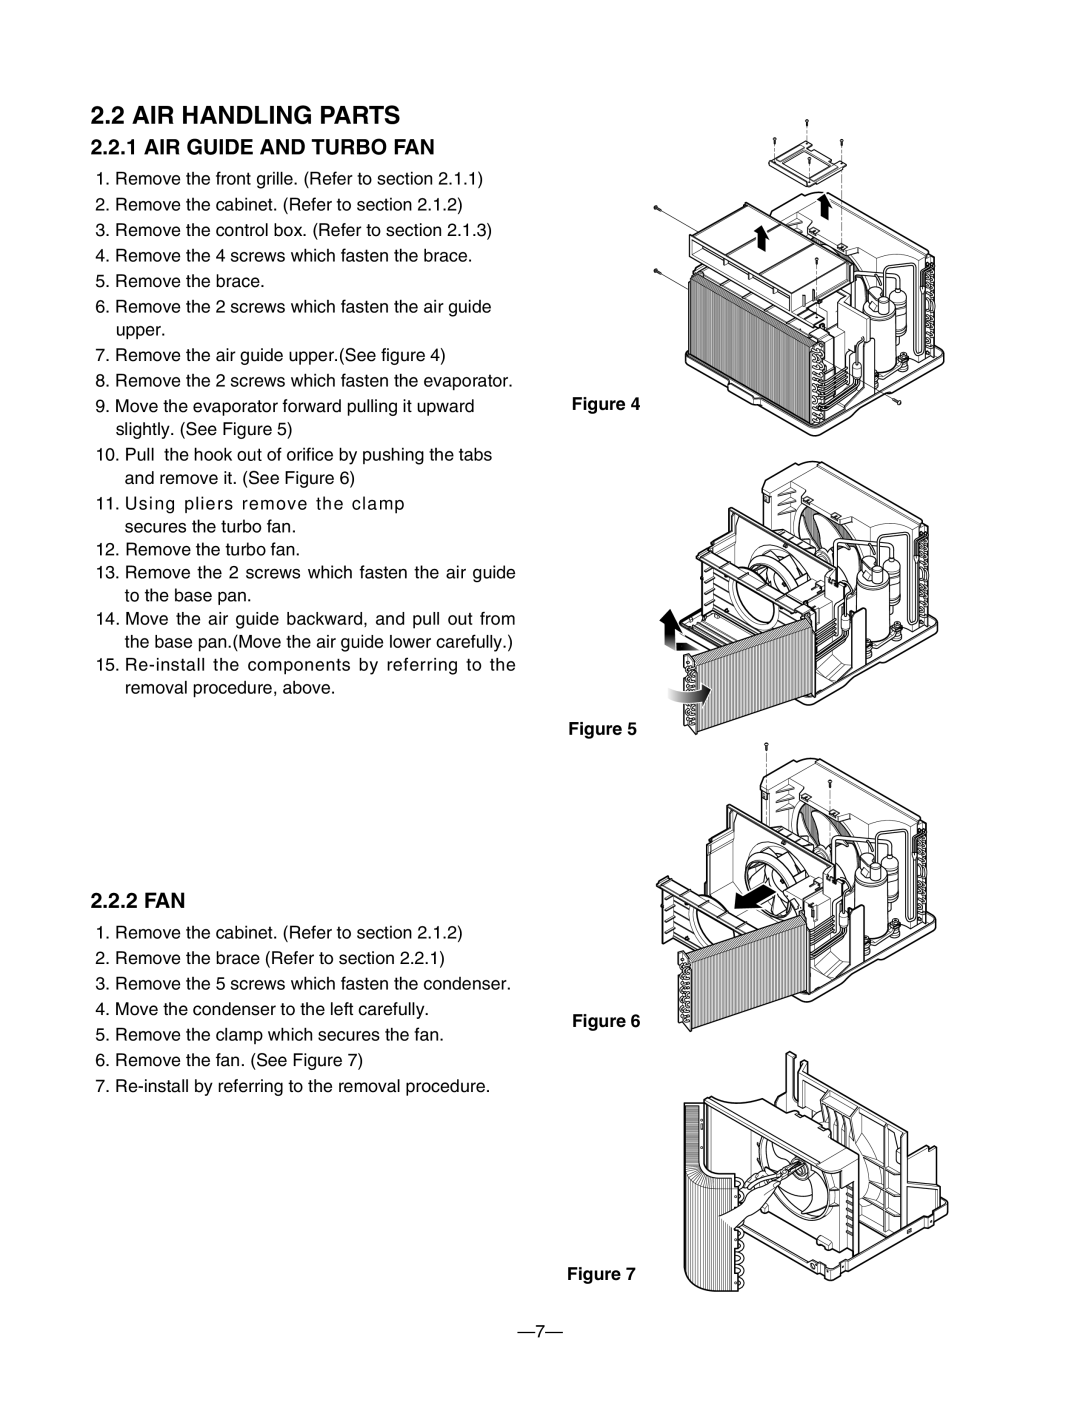 Friedrich CP10A10, ZQ08B10, ZQ10B10 Air Handling Parts, Air Guide And Turbo Fan, 2.2.2 FAN, Figure Figure Figure Figure 